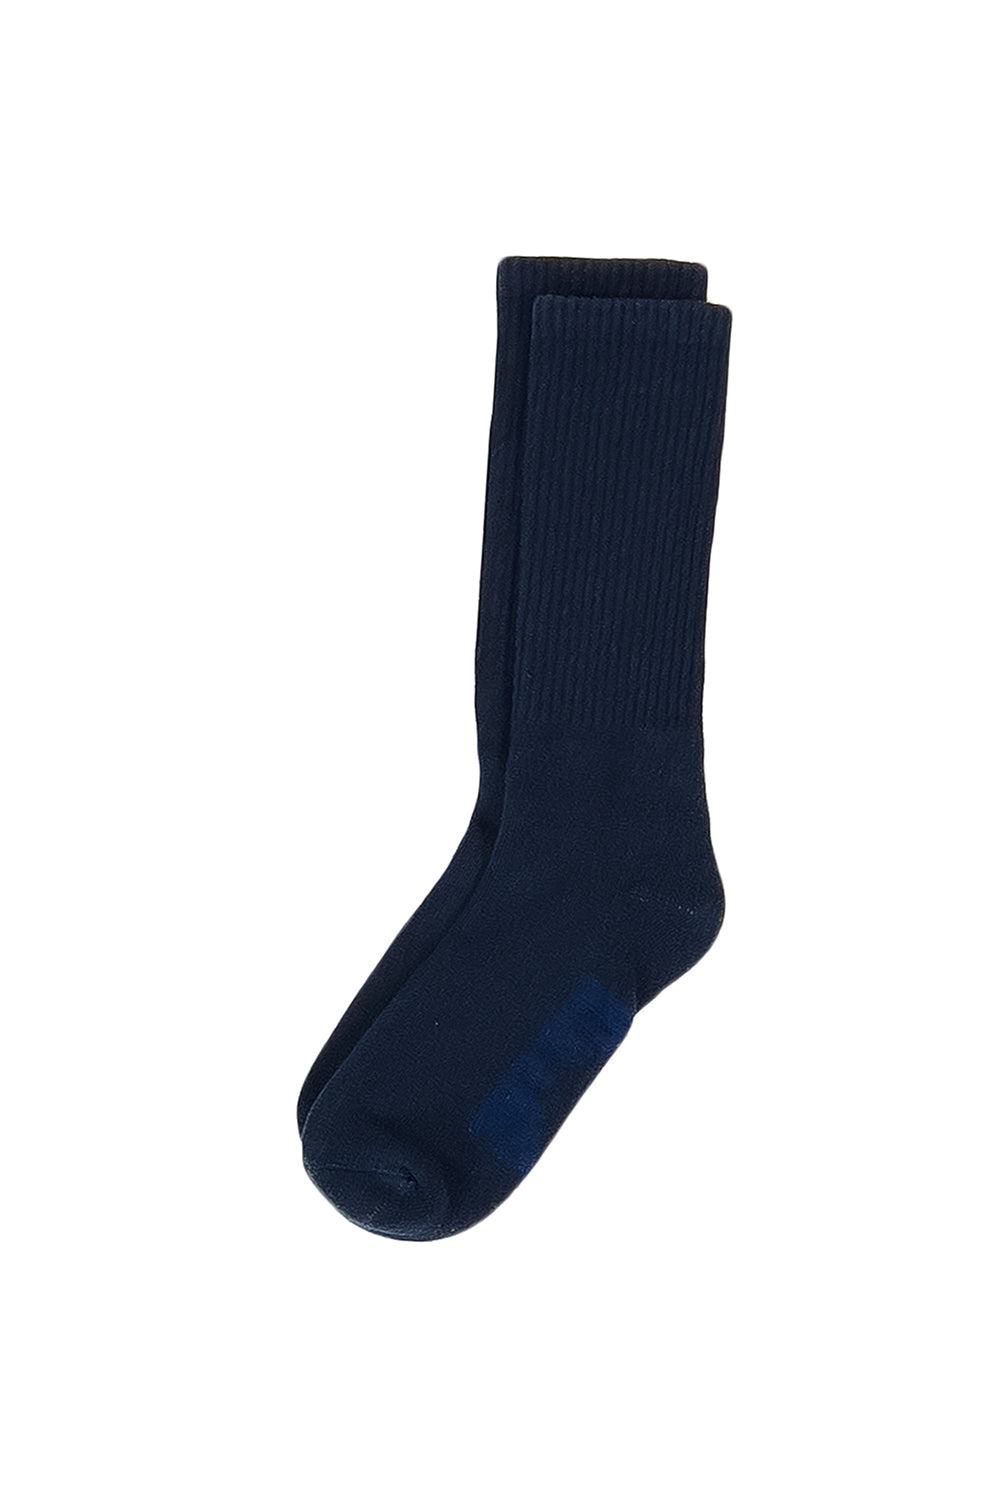 Hemp Wool Crew Socks | Jungmaven Hemp Clothing & Accessories / Color: Navy